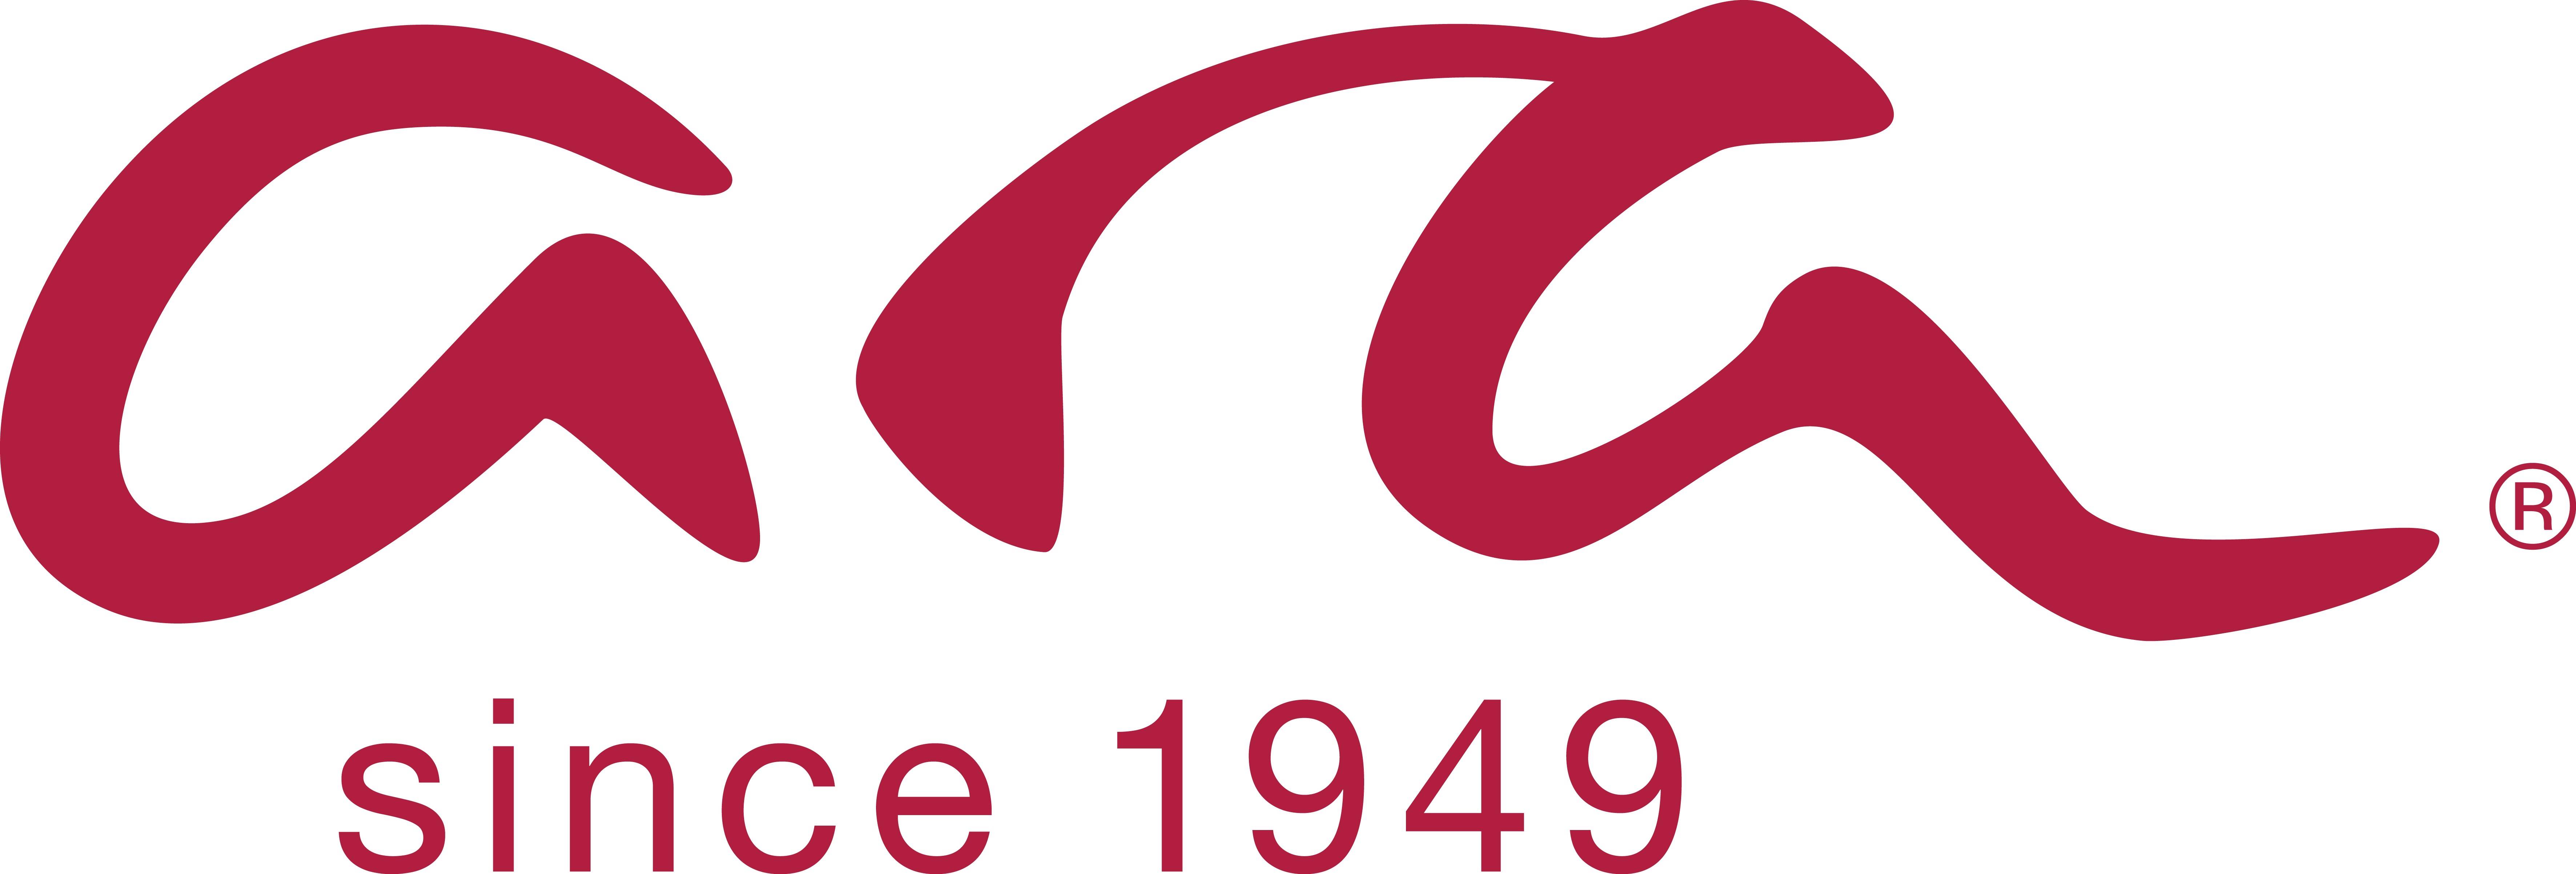 ara Shoes - logo